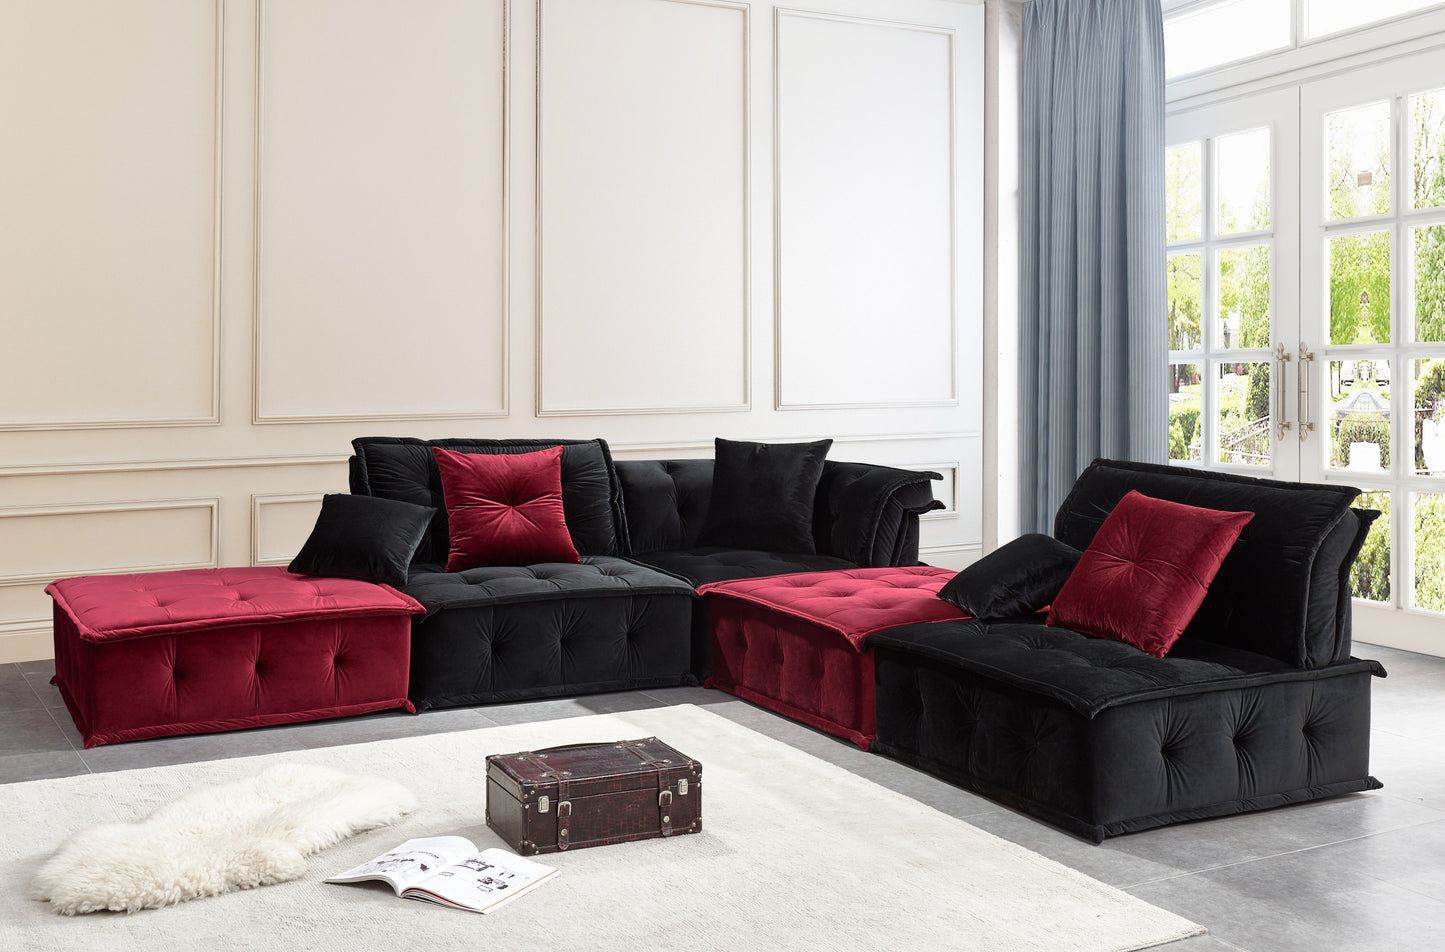 Fabric Modular Sectional Sofa, Contemporary Velvet Divani Casa, Living Room Couch (Black & Red)